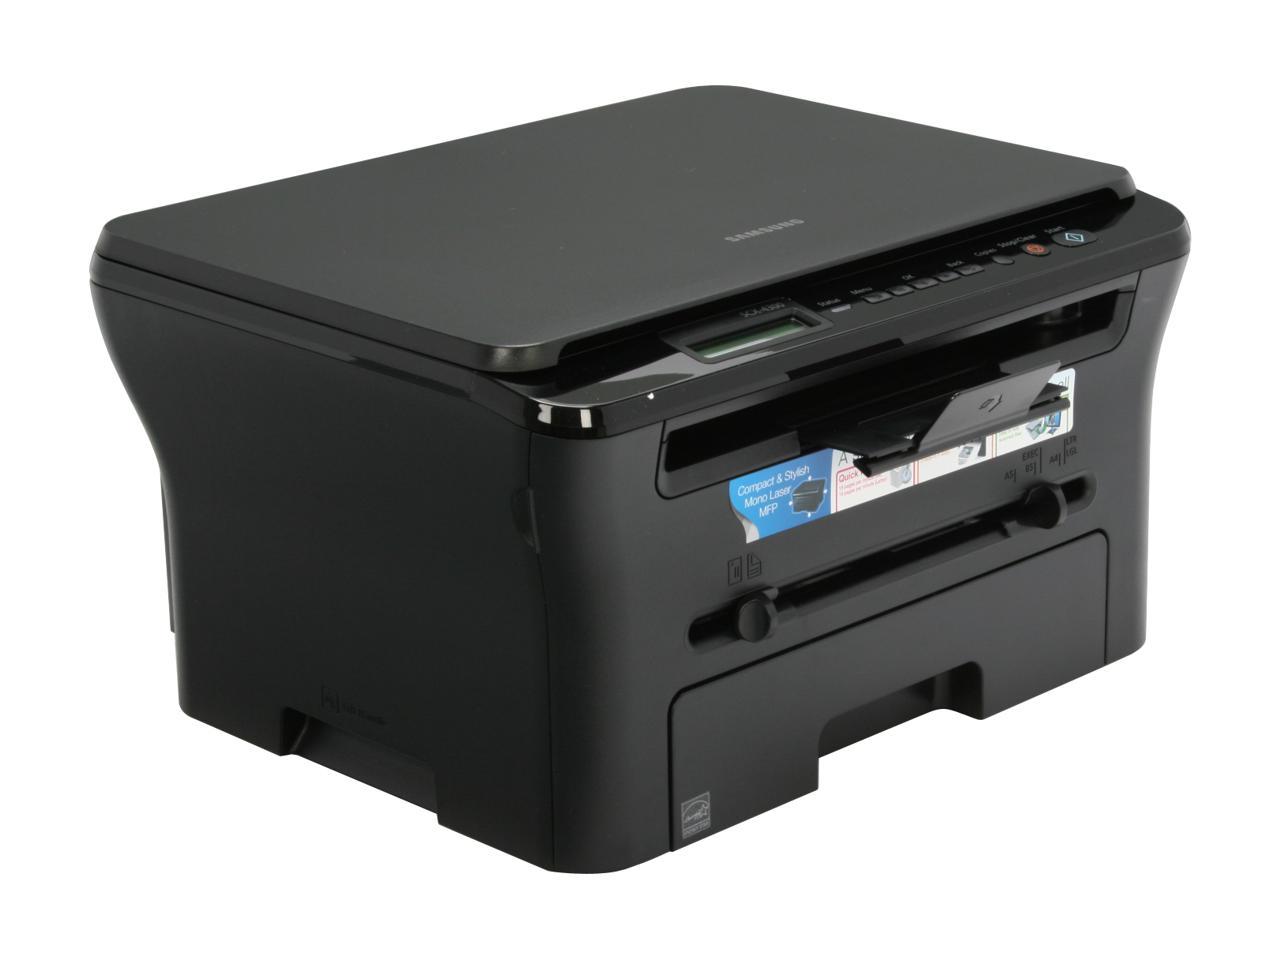 SAMSUNG SCX-4300 MFC / All-In-One Monochrome Laser Printer - Newegg.com